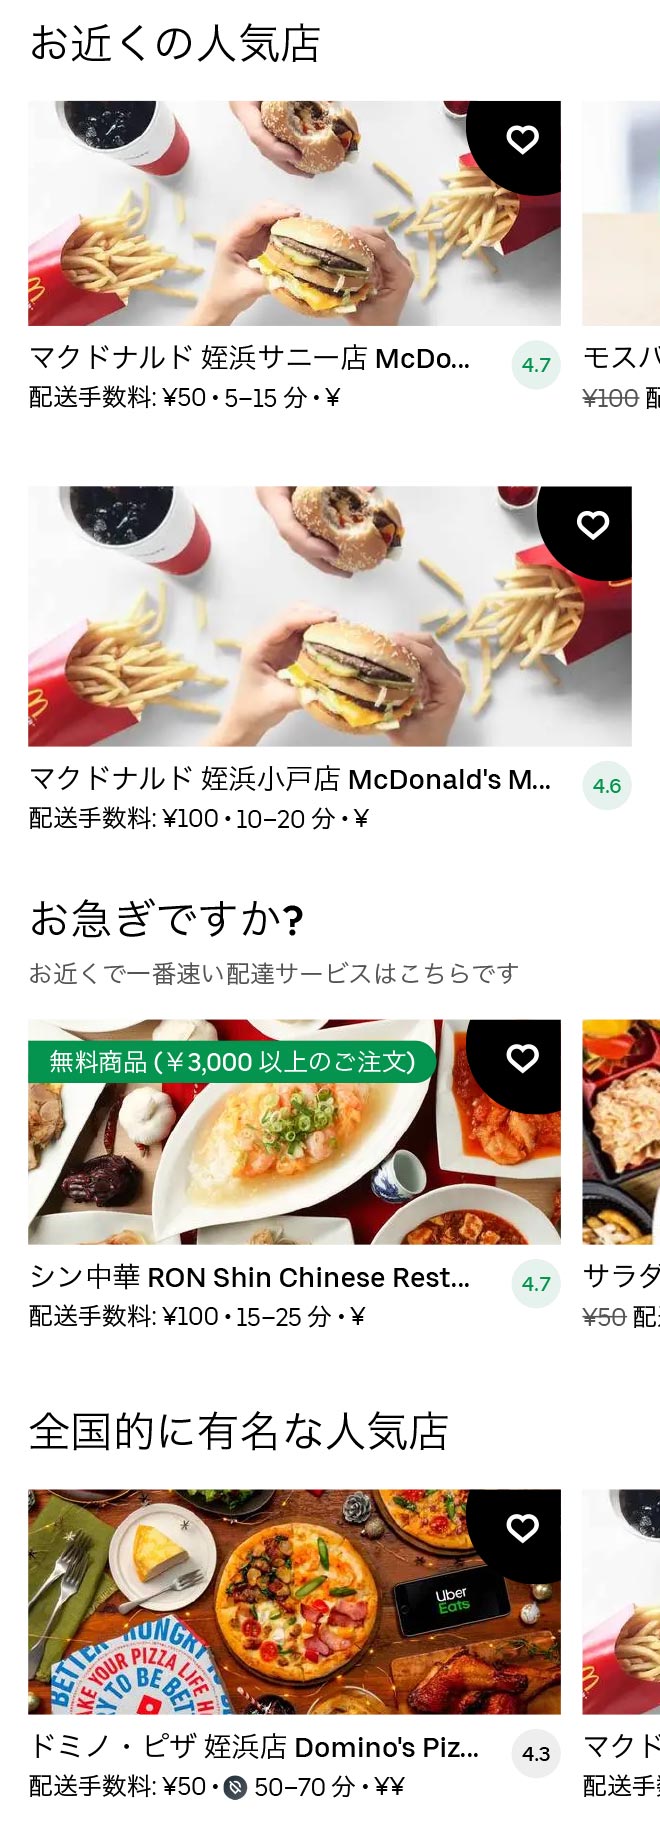 Meinohama menu 2101 01